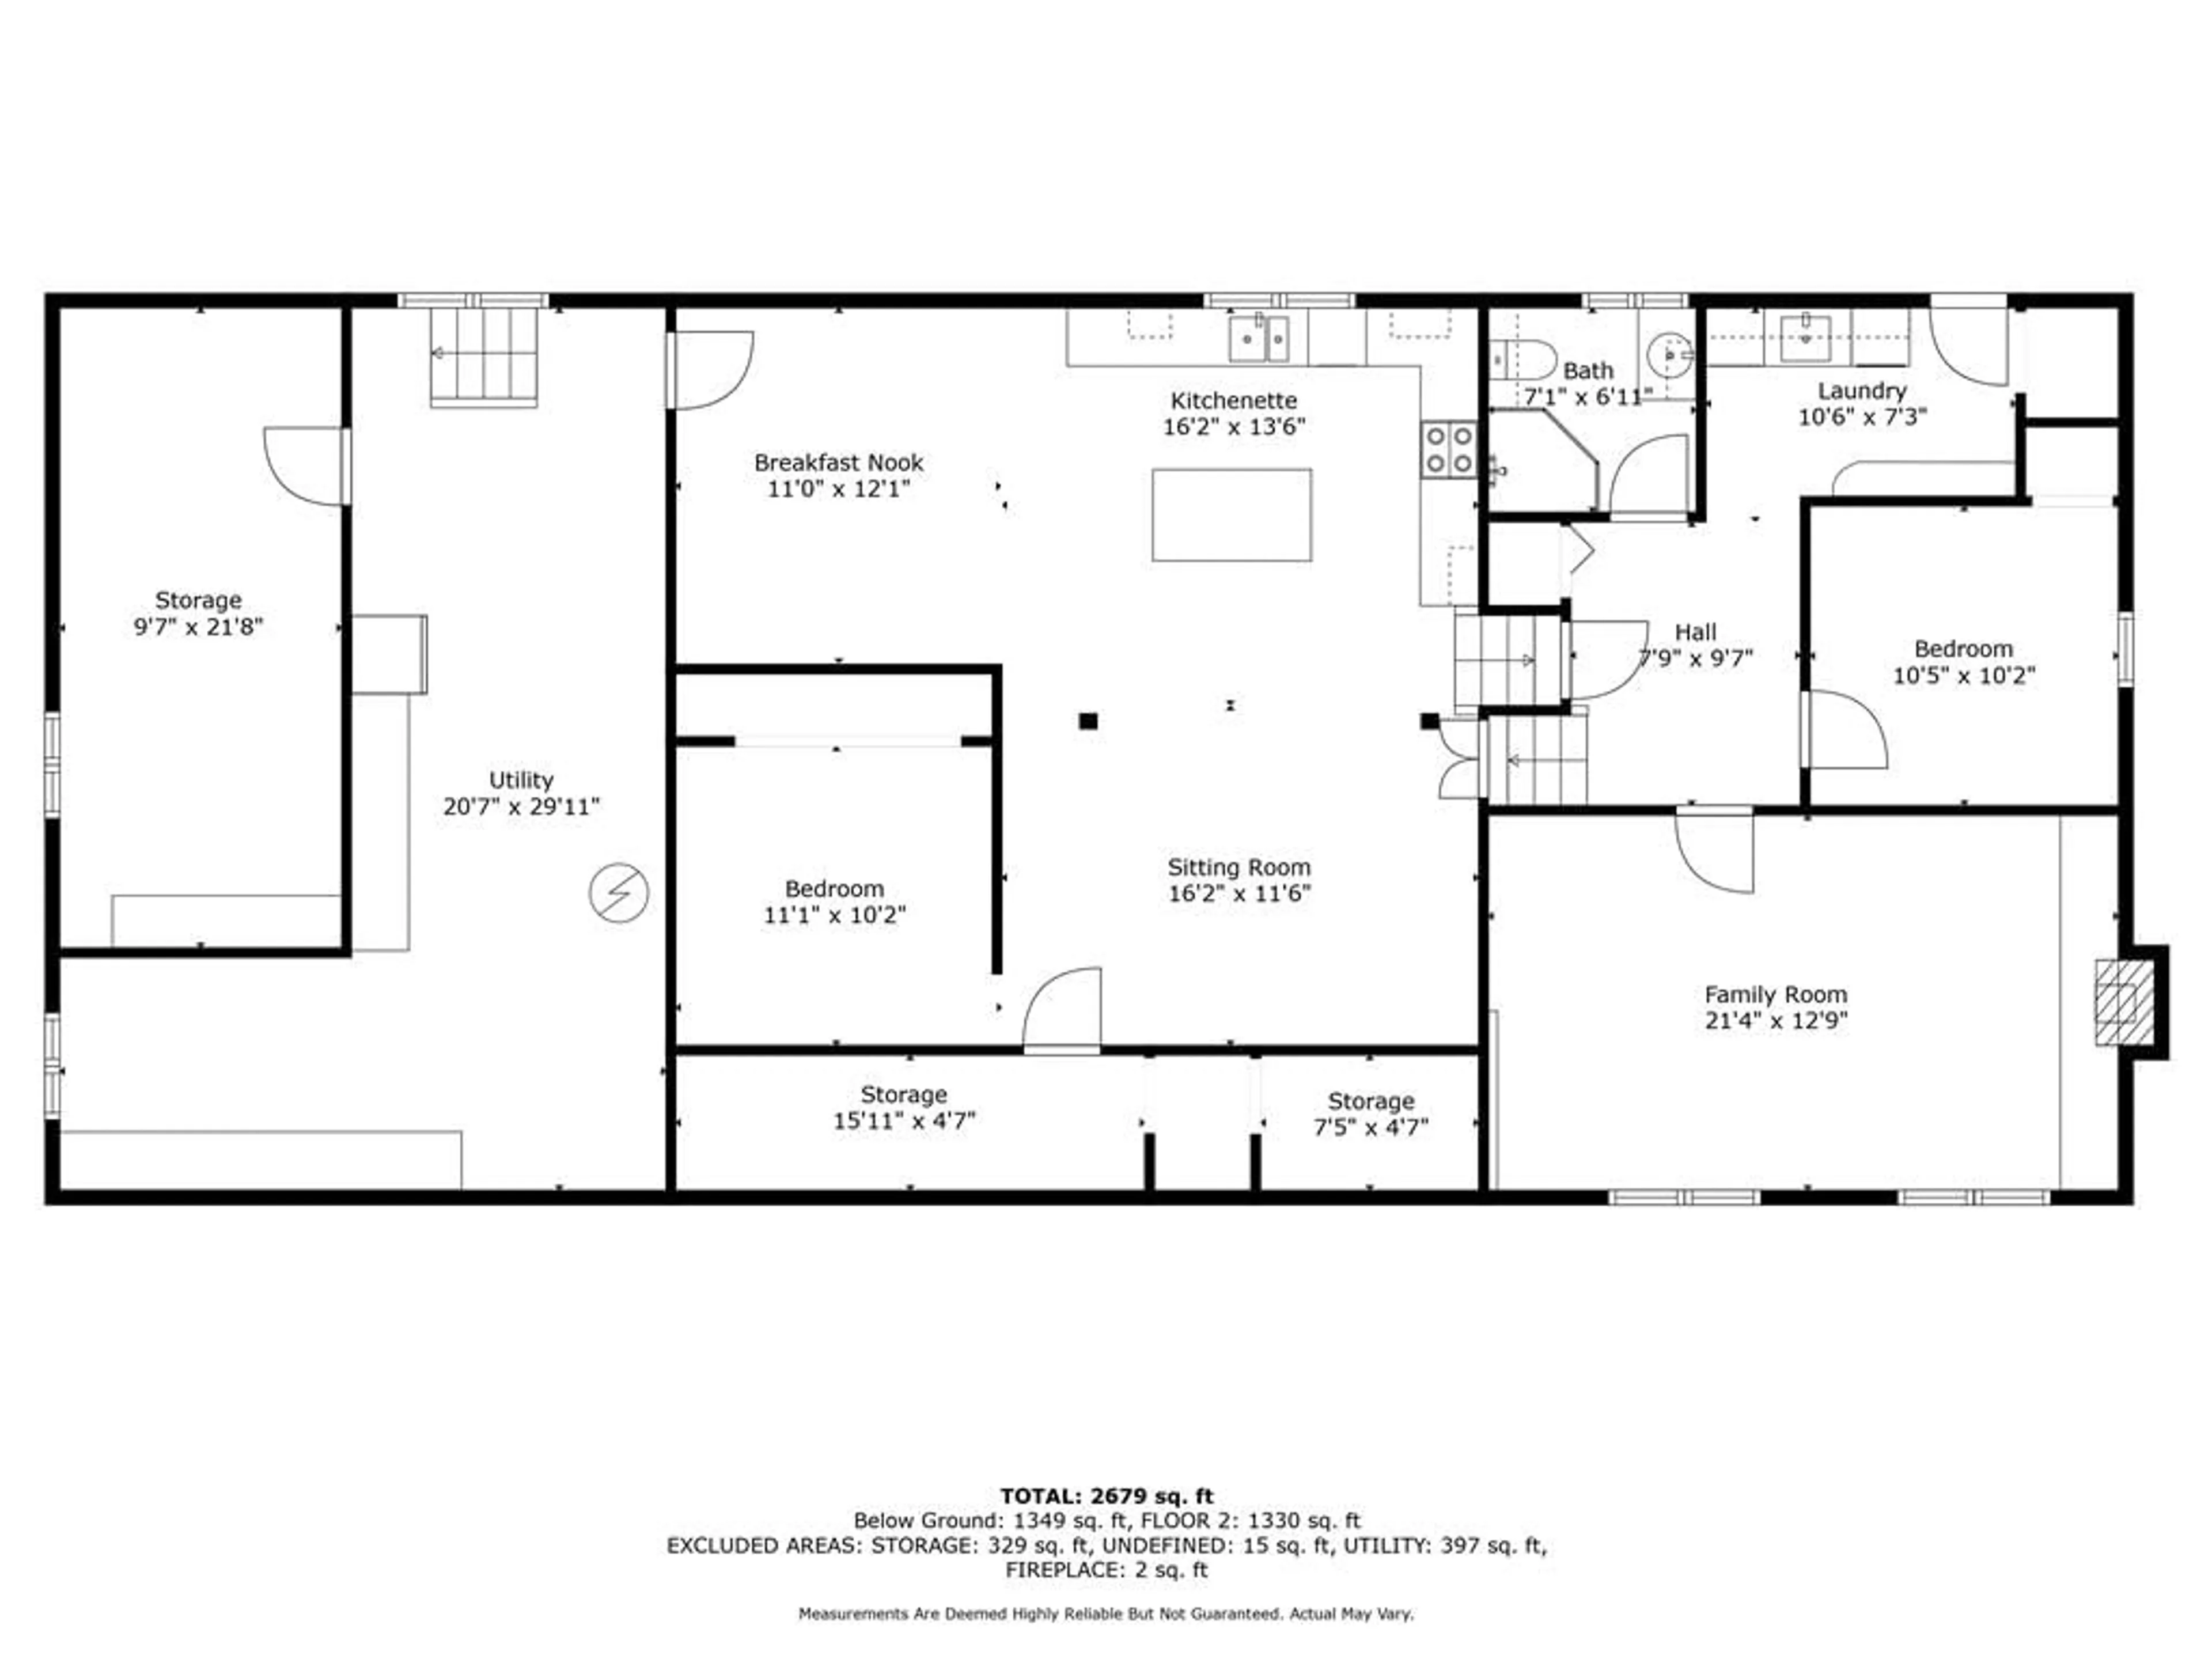 Floor plan for 541 Garner Rd, Ancaster Ontario L9G 3K9